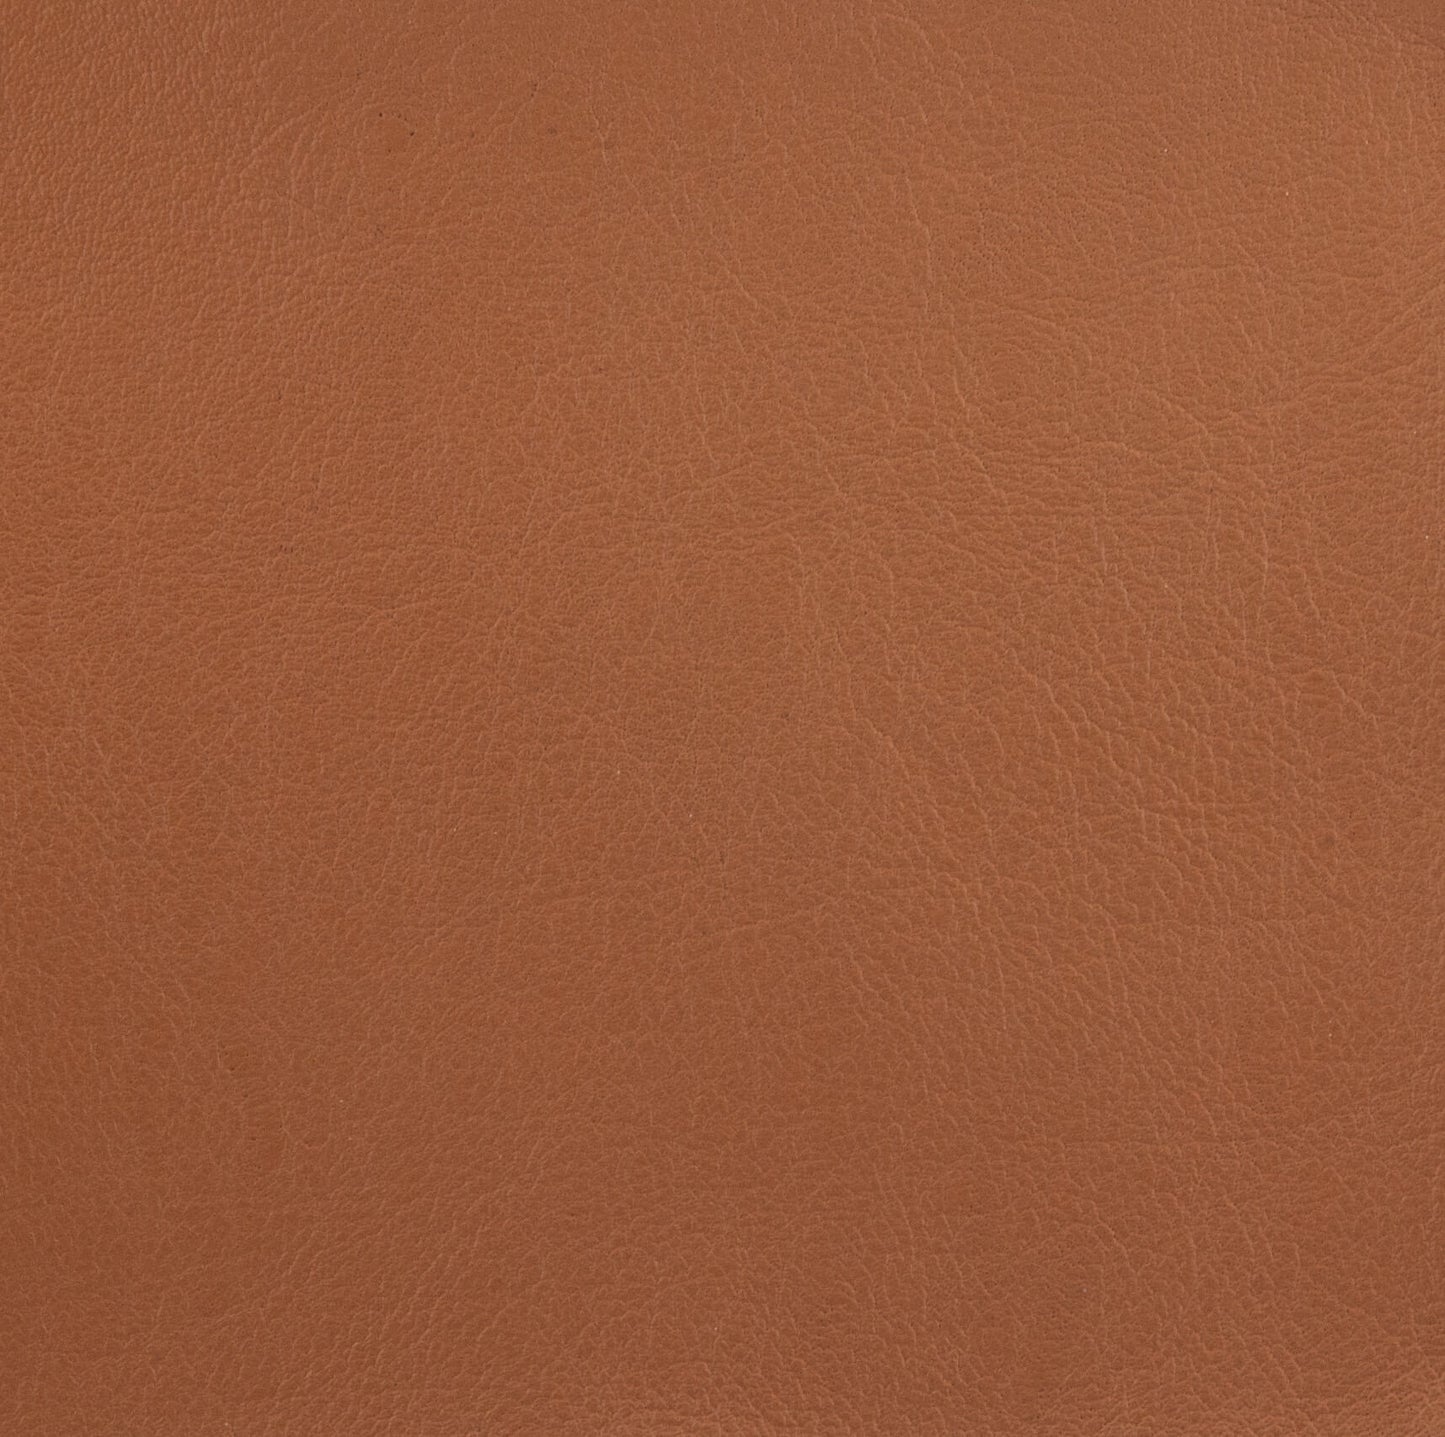 Caramel - Kangaroo Leather